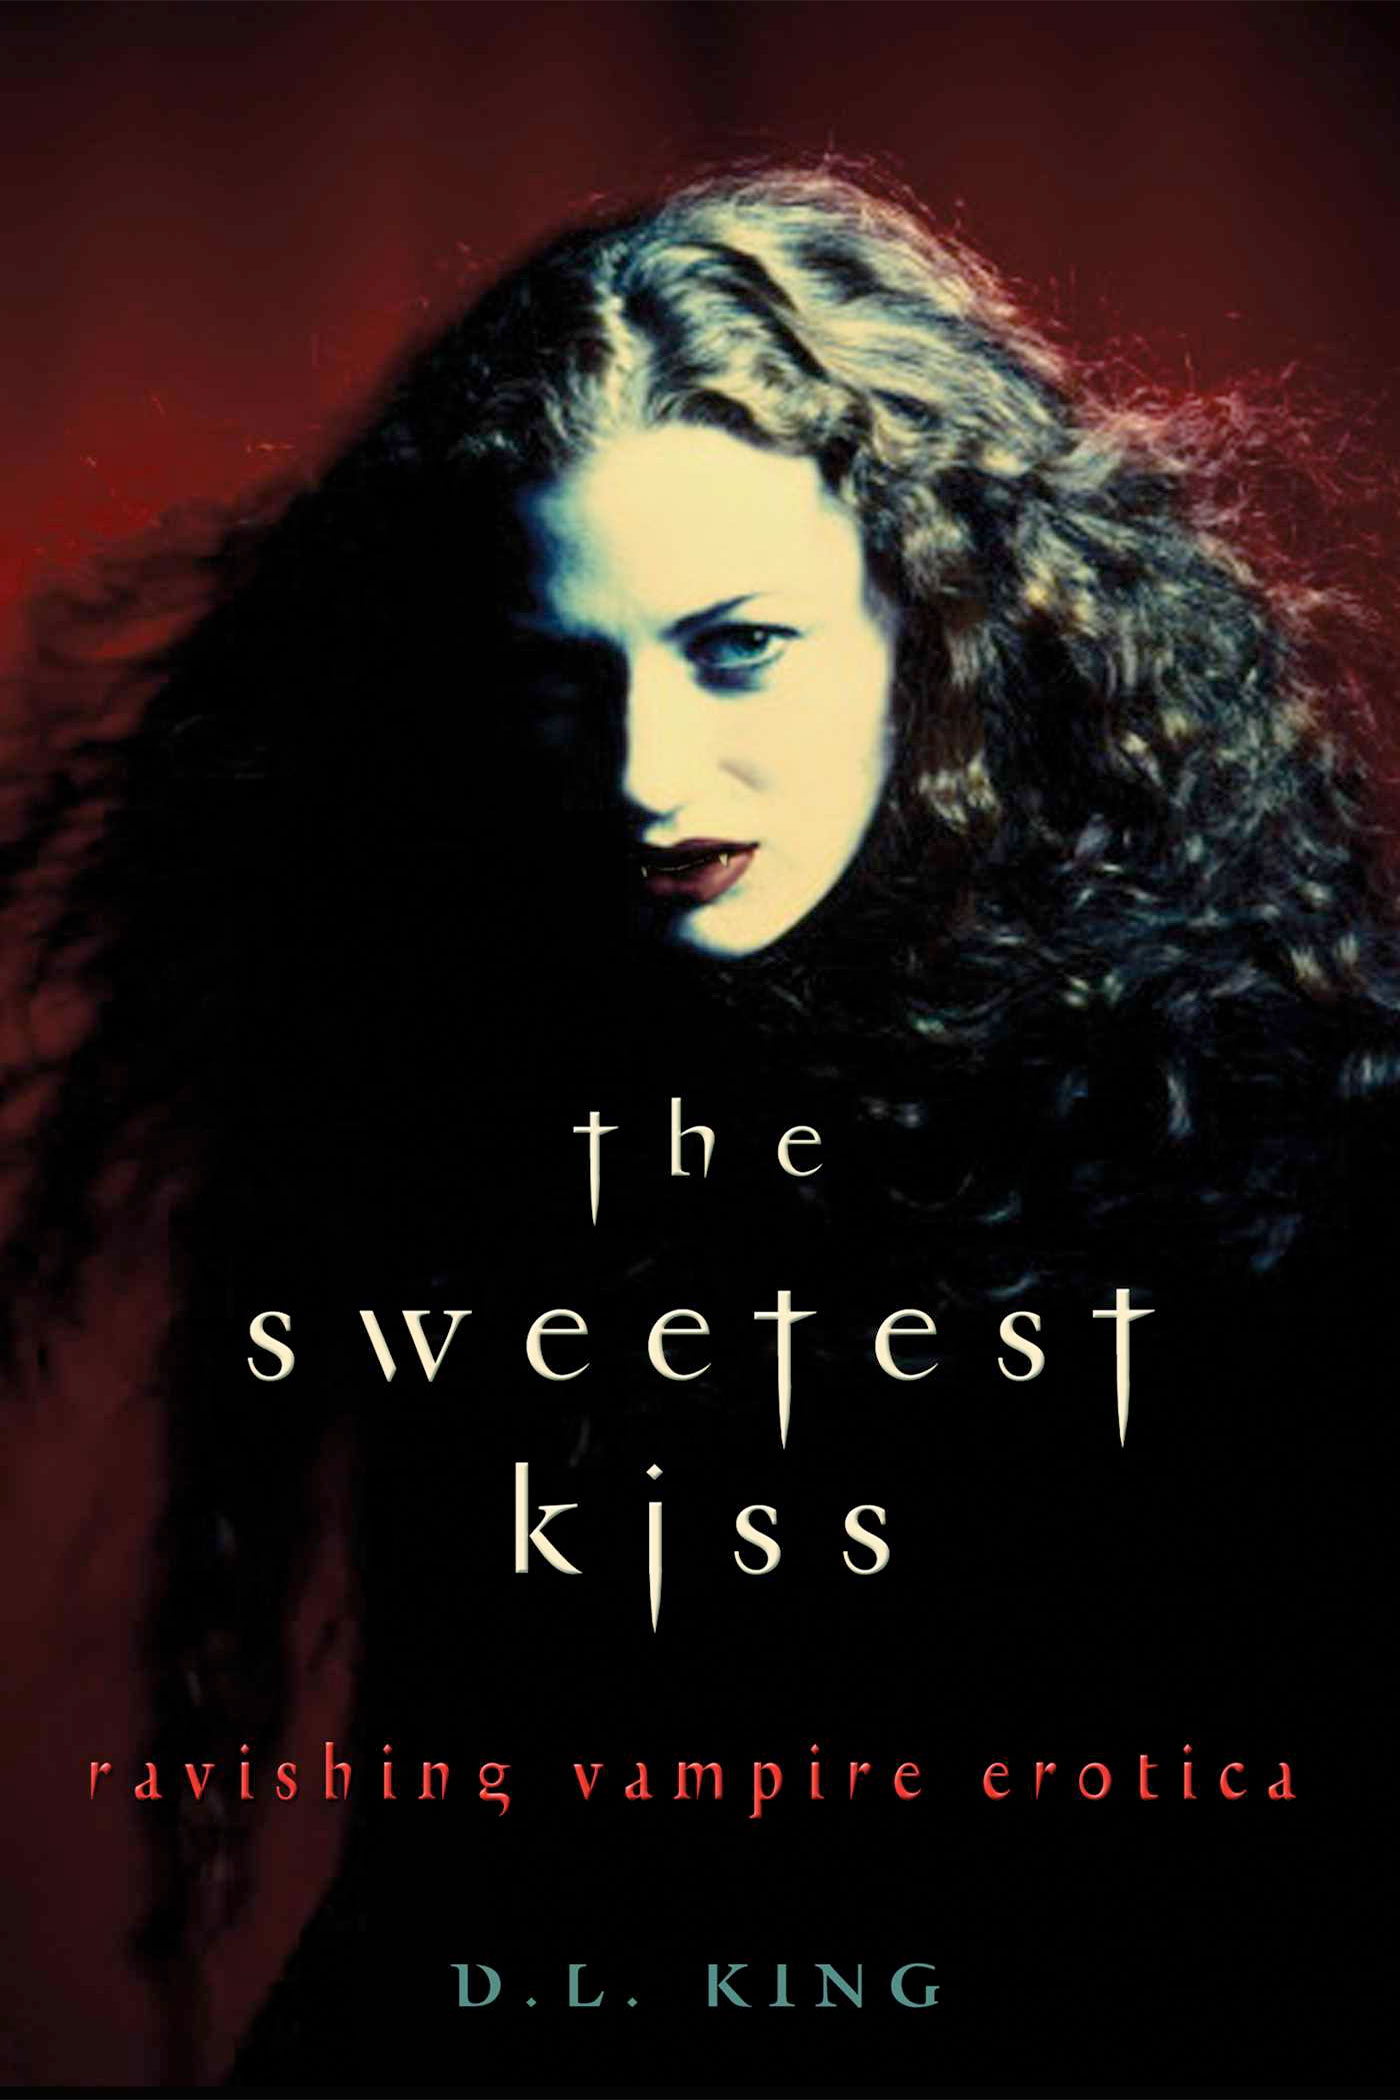 The Sweetest Kiss: Ravishing Vampire Erotica by D.L. King (Editor)